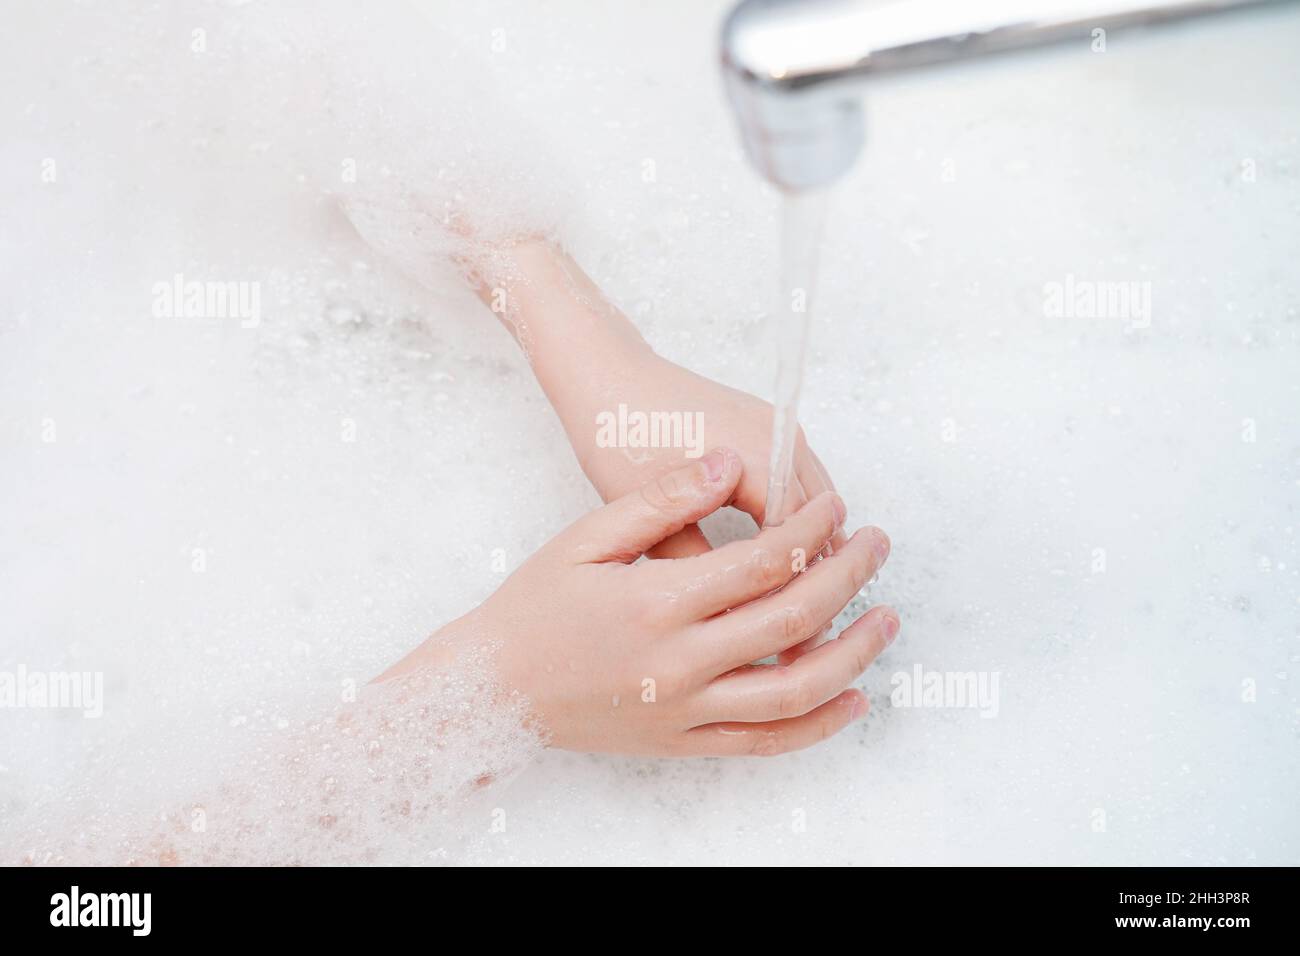 Child washing hand in bathroom. Medicine, hygiene concept. Stock Photo